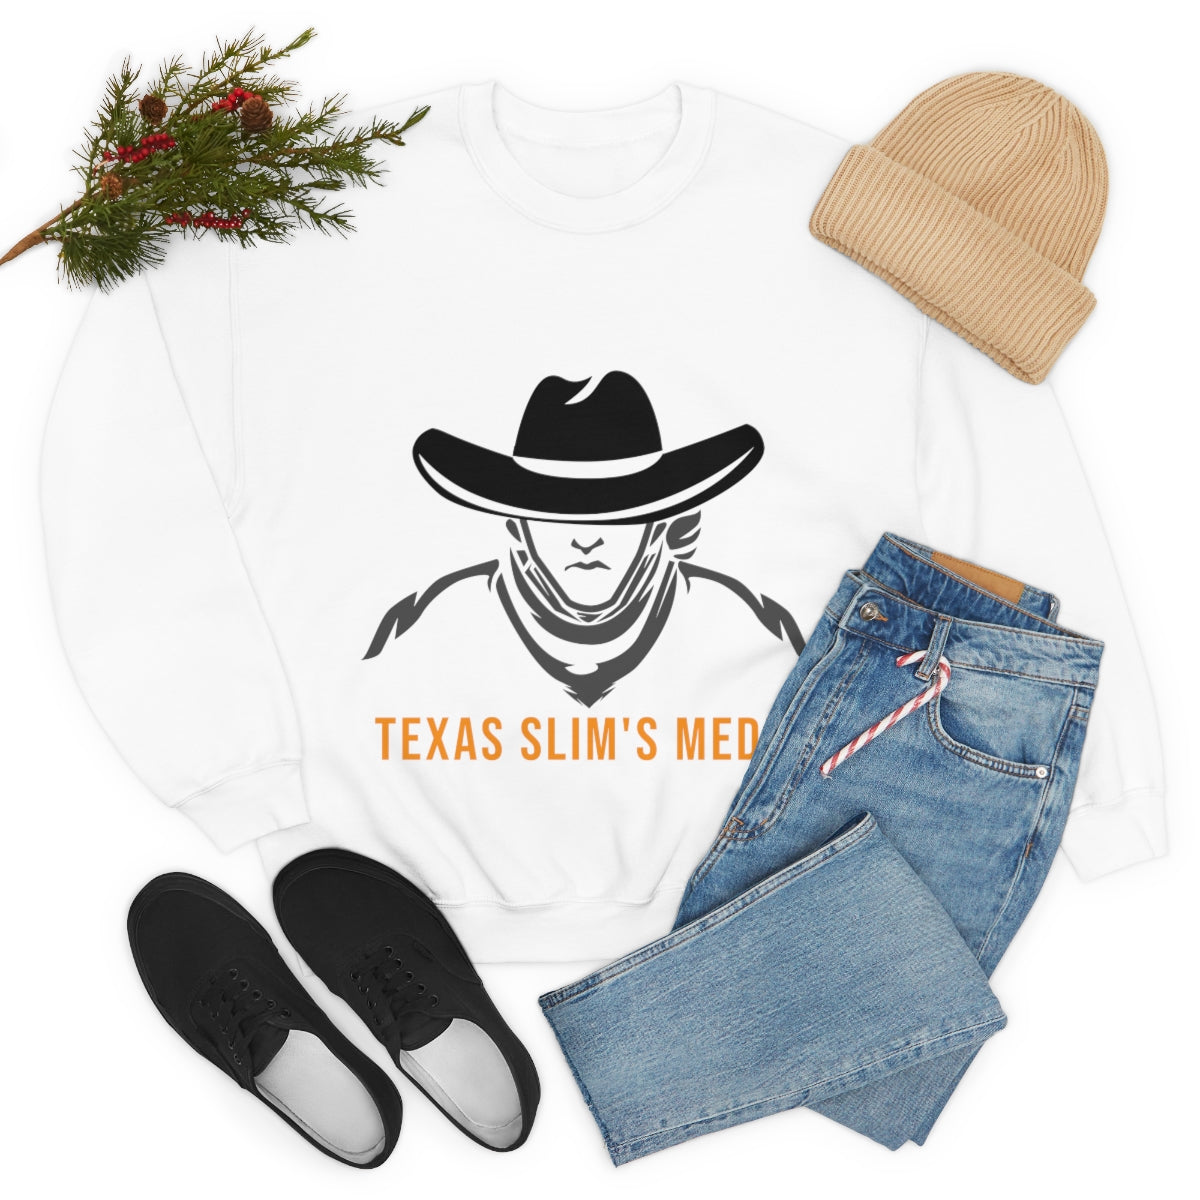 Texas Slim's Media Heavy Blend™ Crewneck Sweatshirt